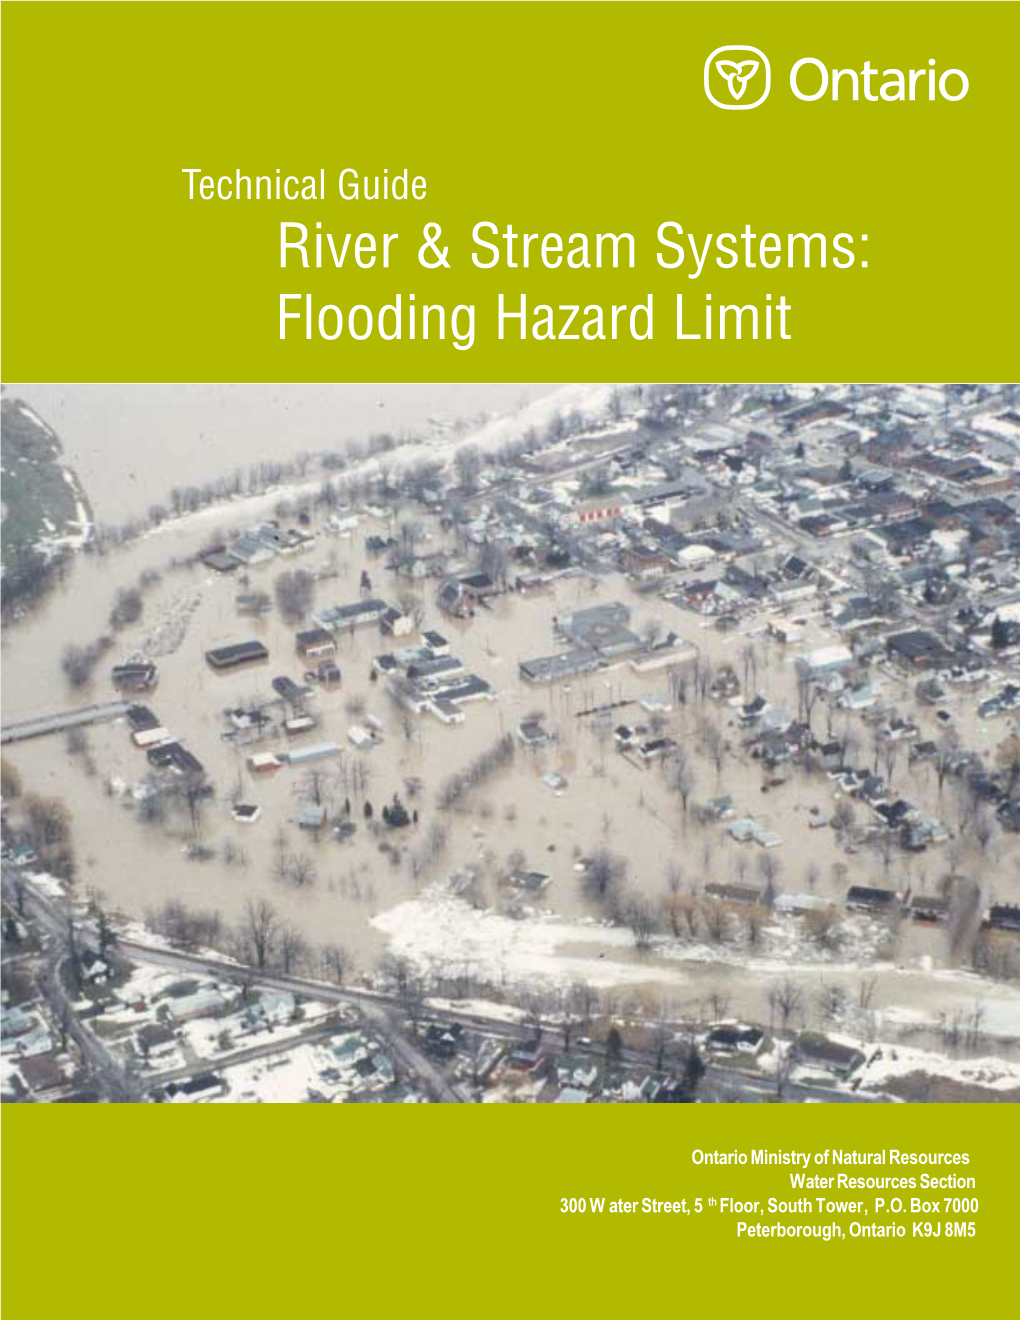 River & Stream Systems: Flooding Hazard Limit